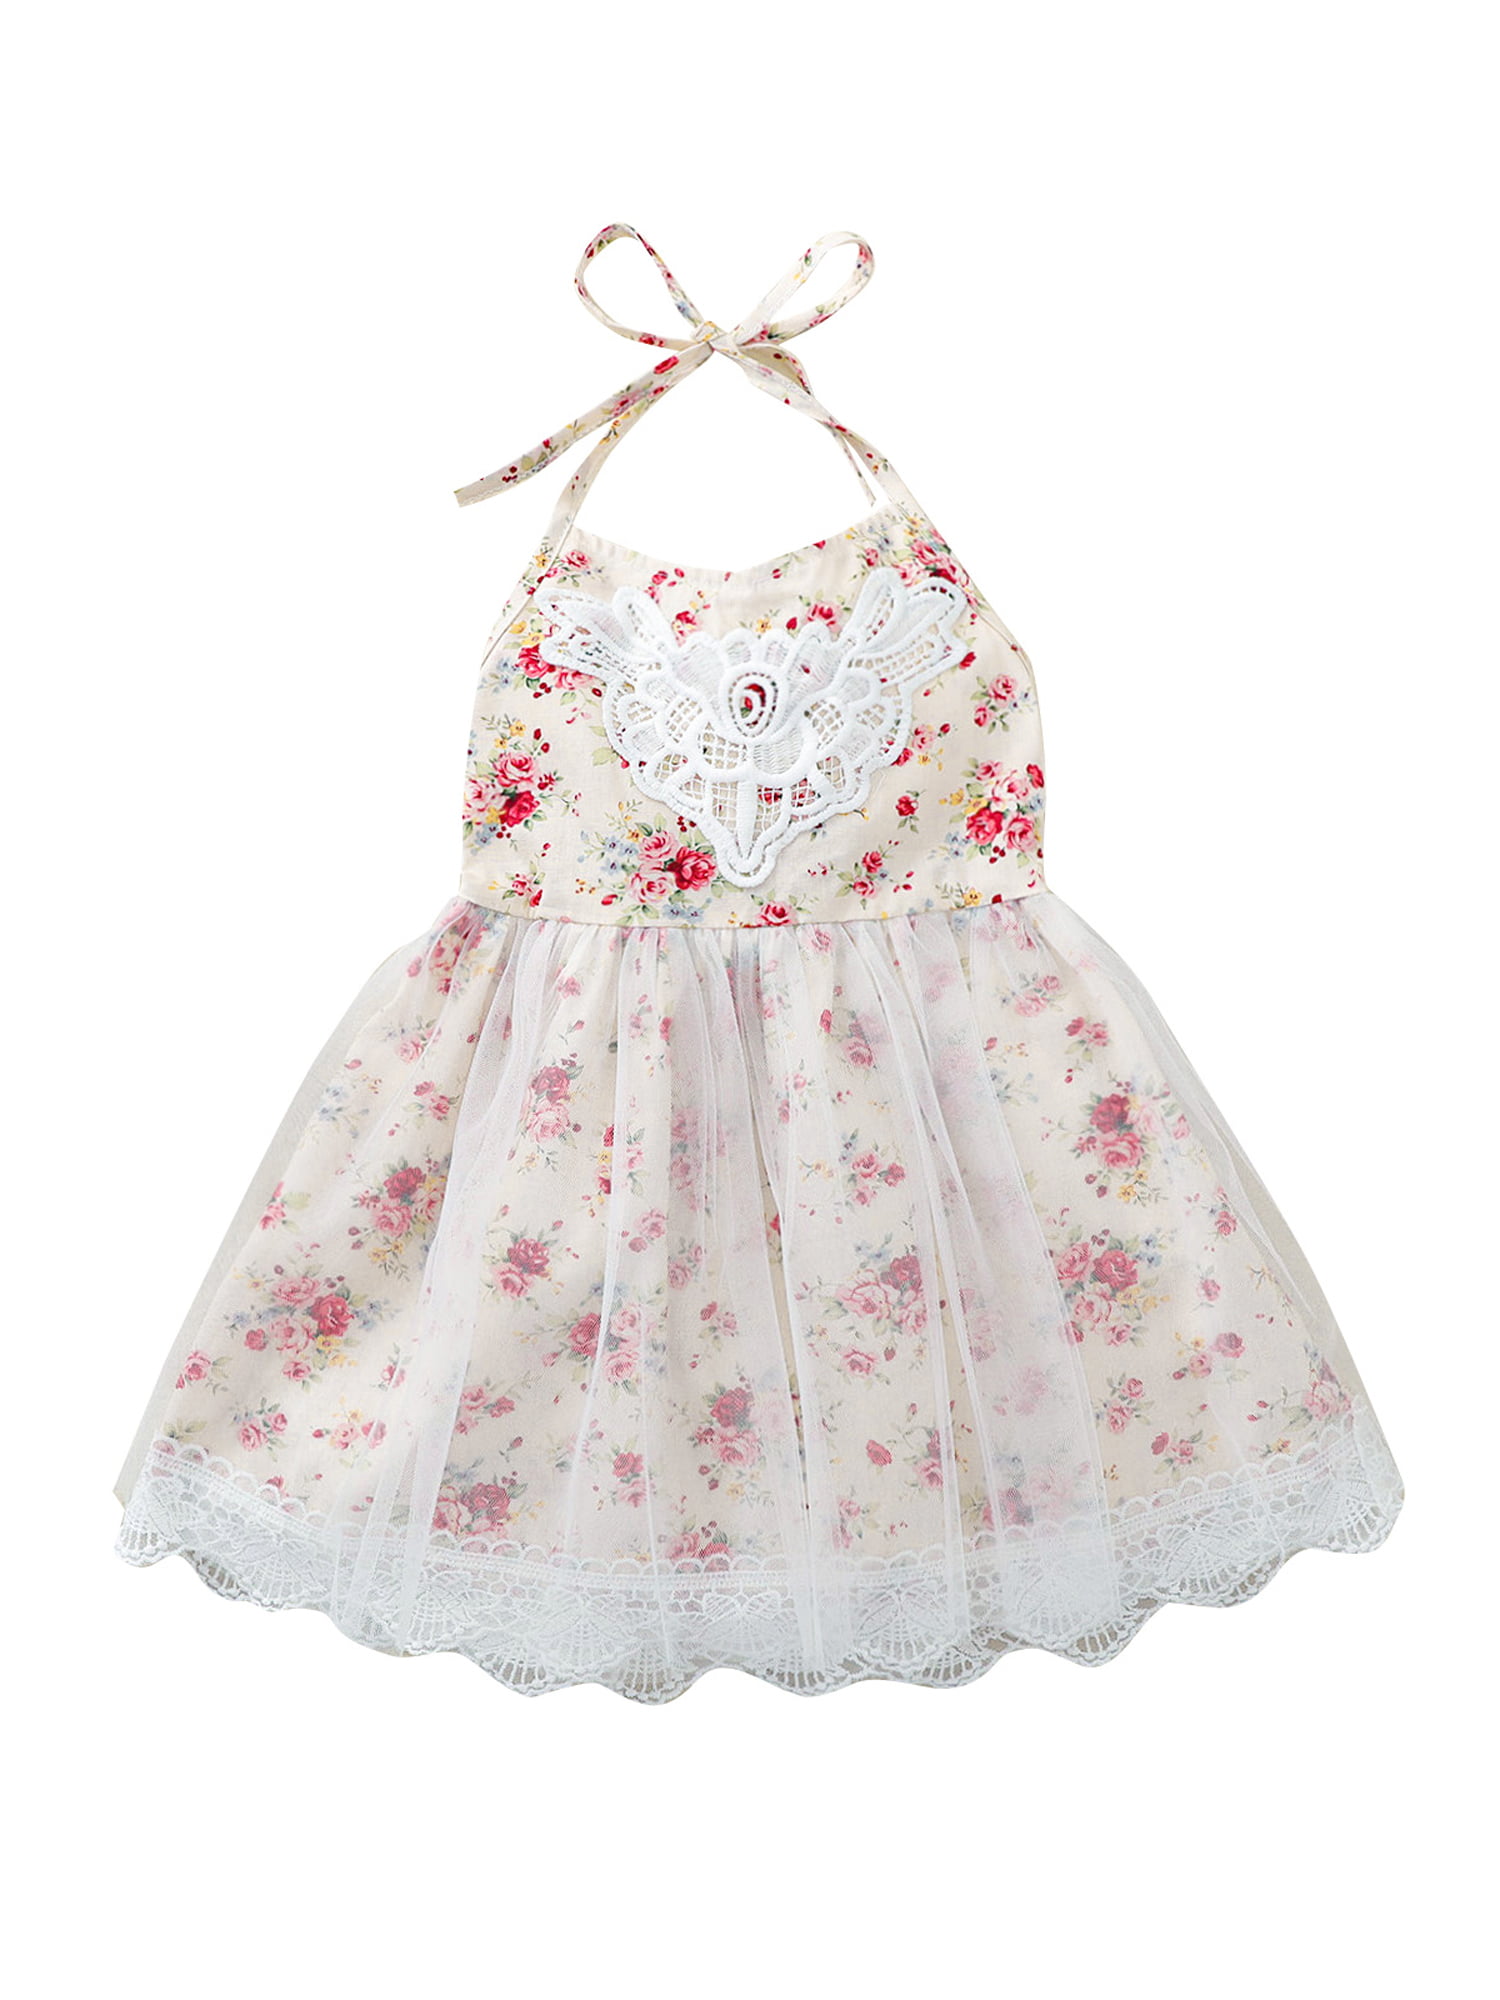 Sleeveless 12-18 & 18-24 months Baby Girl Dress/ Sling Lace Baby Dress handmade 